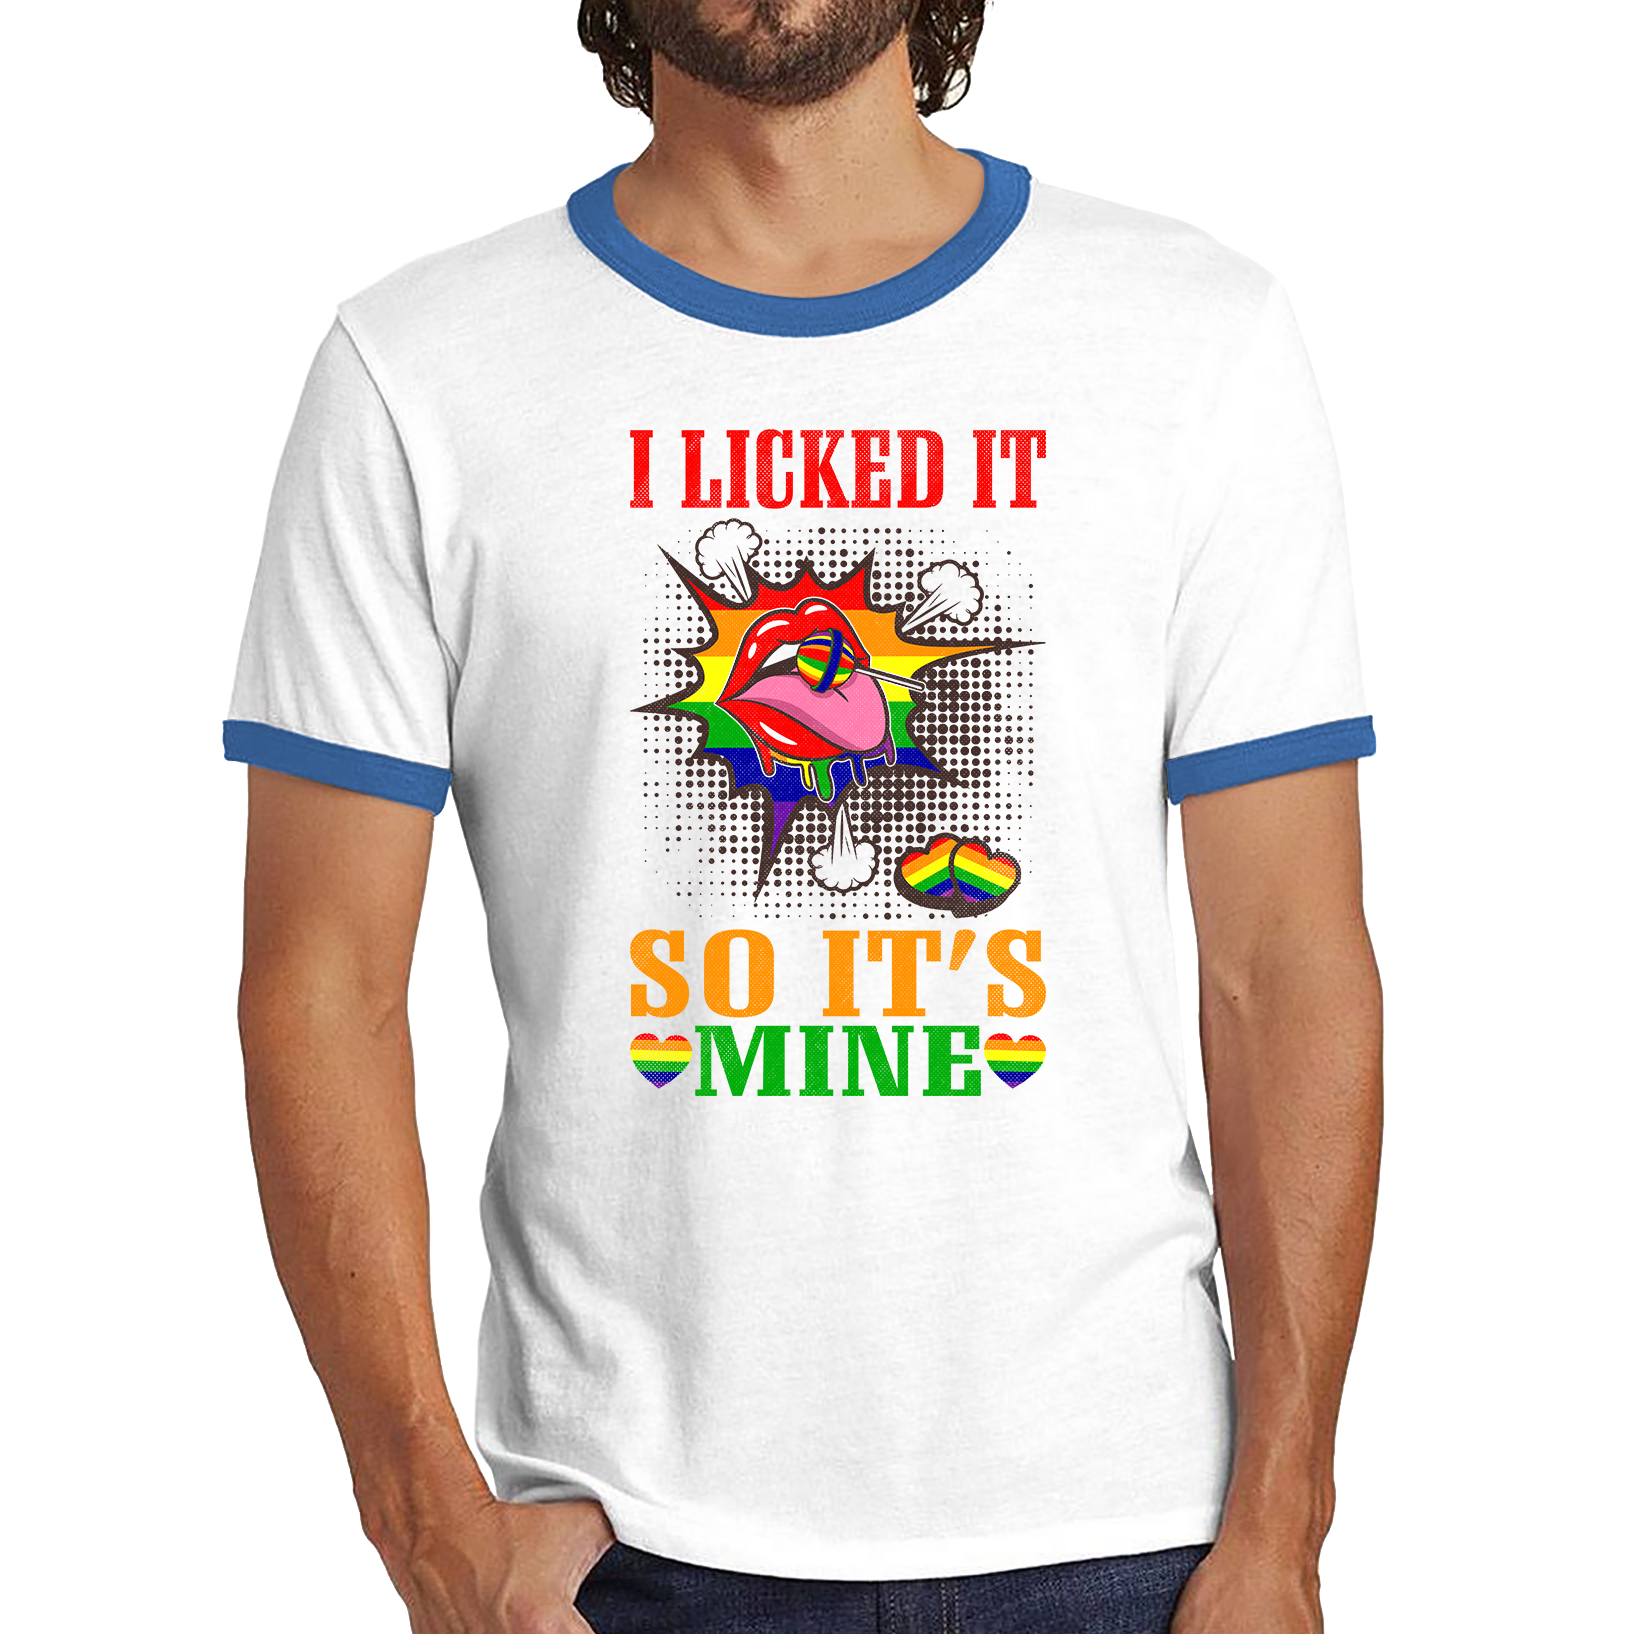 I Licked It So It's Mine LGBT Shirt Funny Lesbians Gay Pride Rainbow Colours Ringer T Shirt